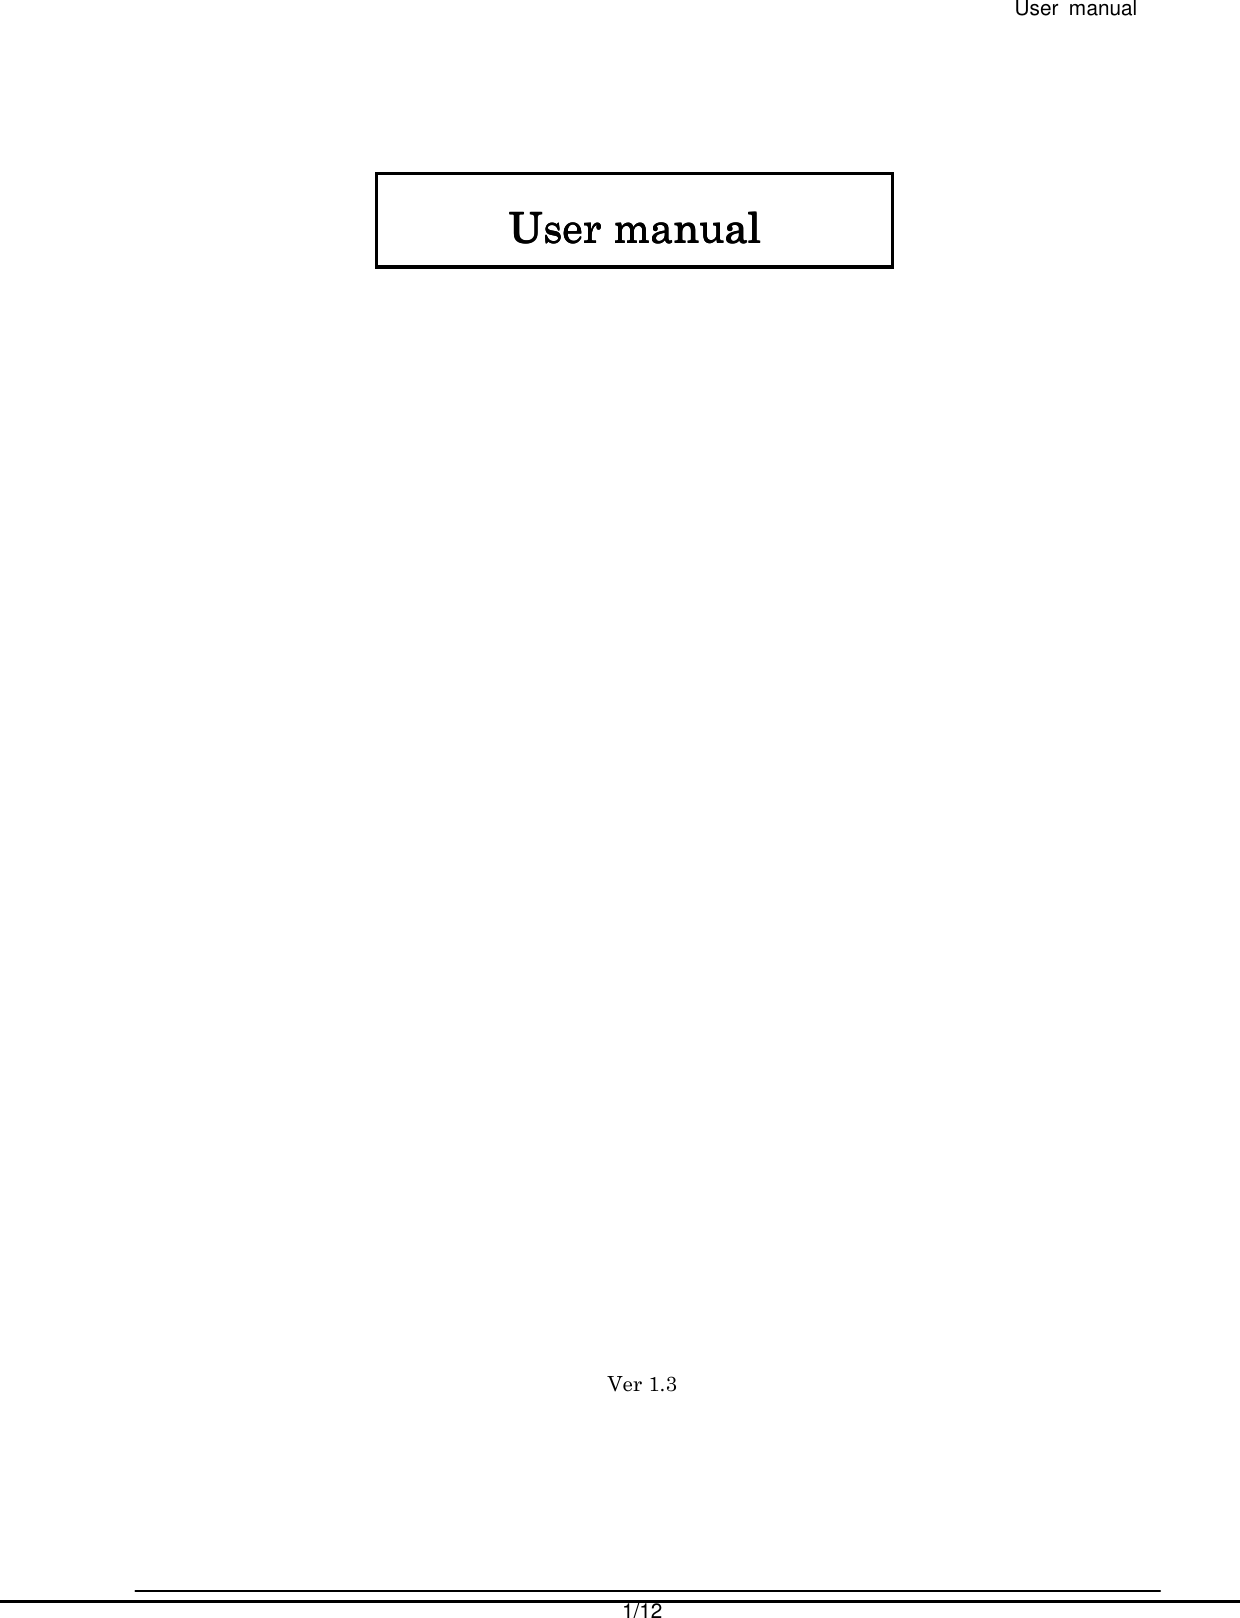  User  manual  1/12                                                      Ver 1.3        User manualUser manualUser manualUser manual    